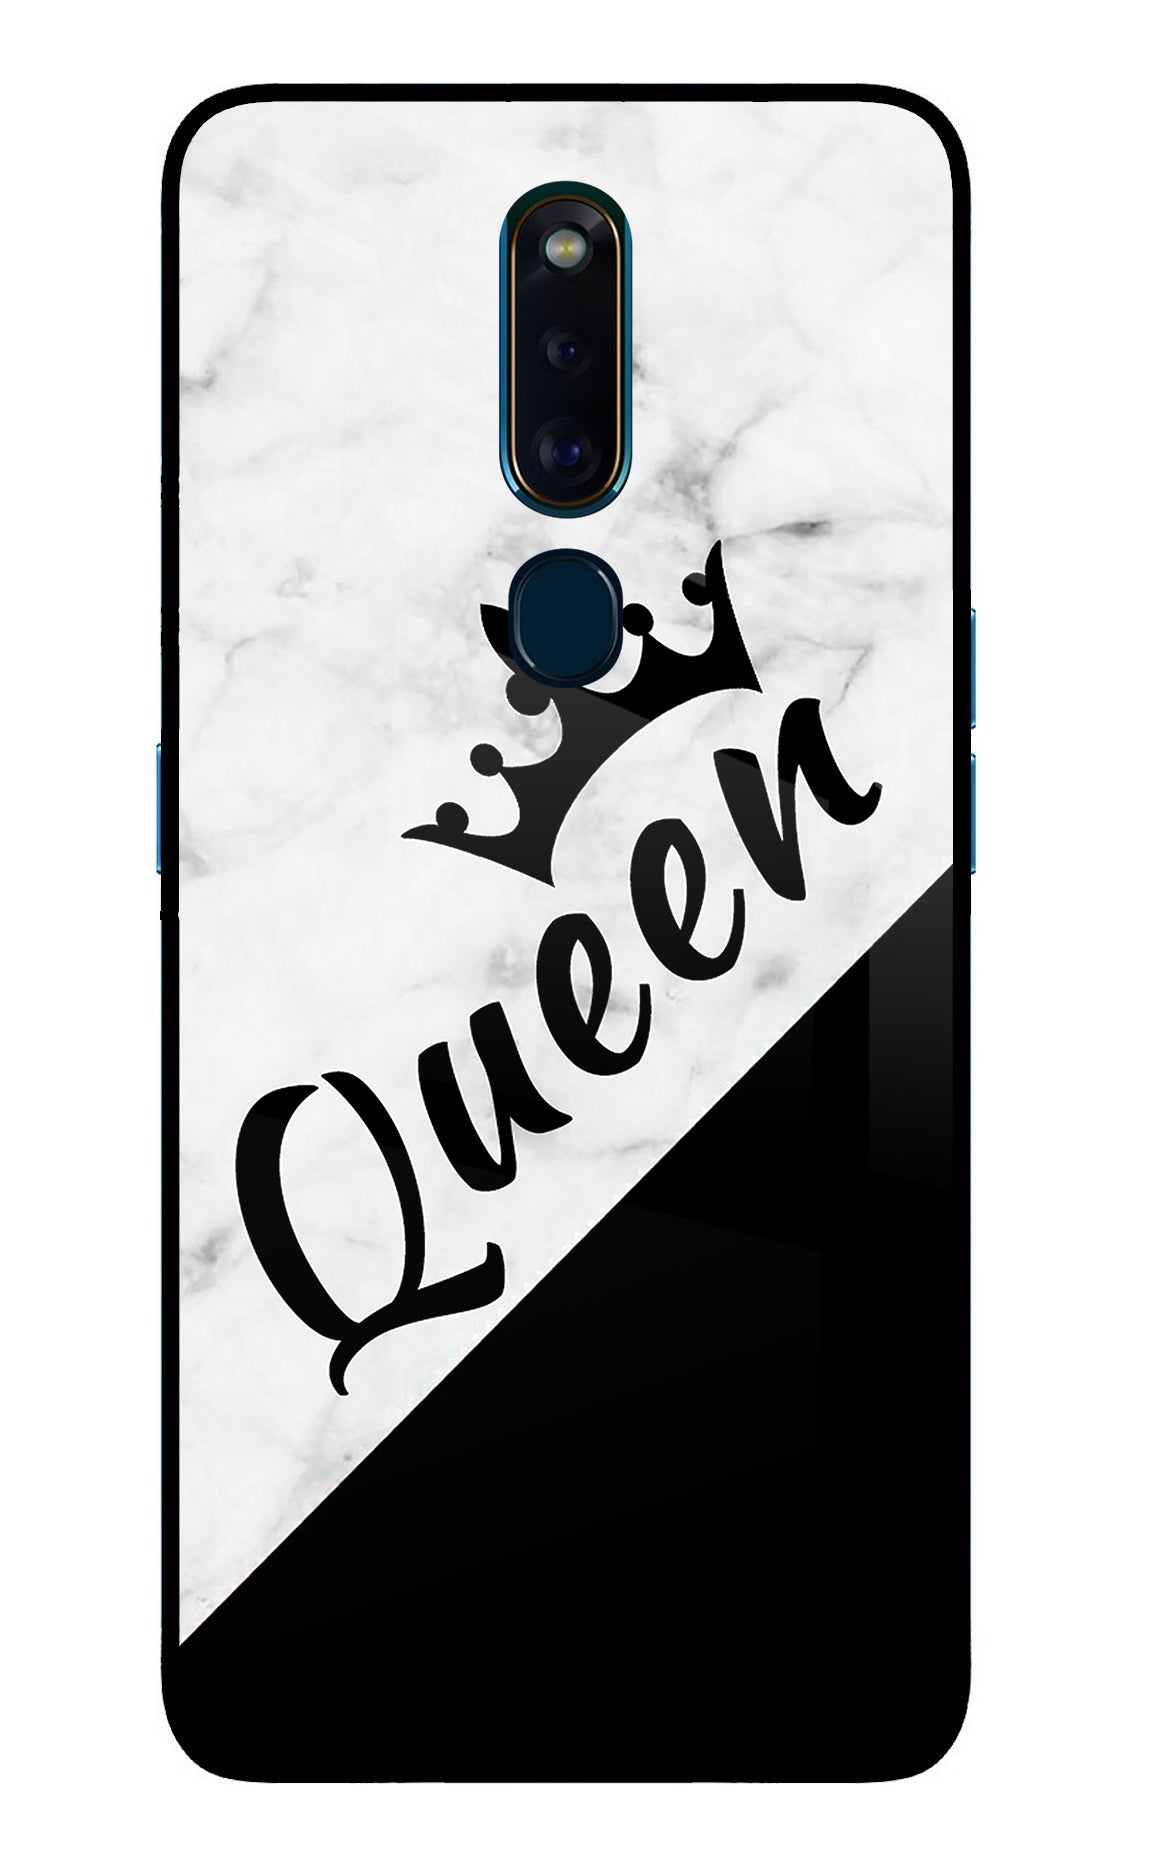 Queen Oppo F11 Pro Glass Case